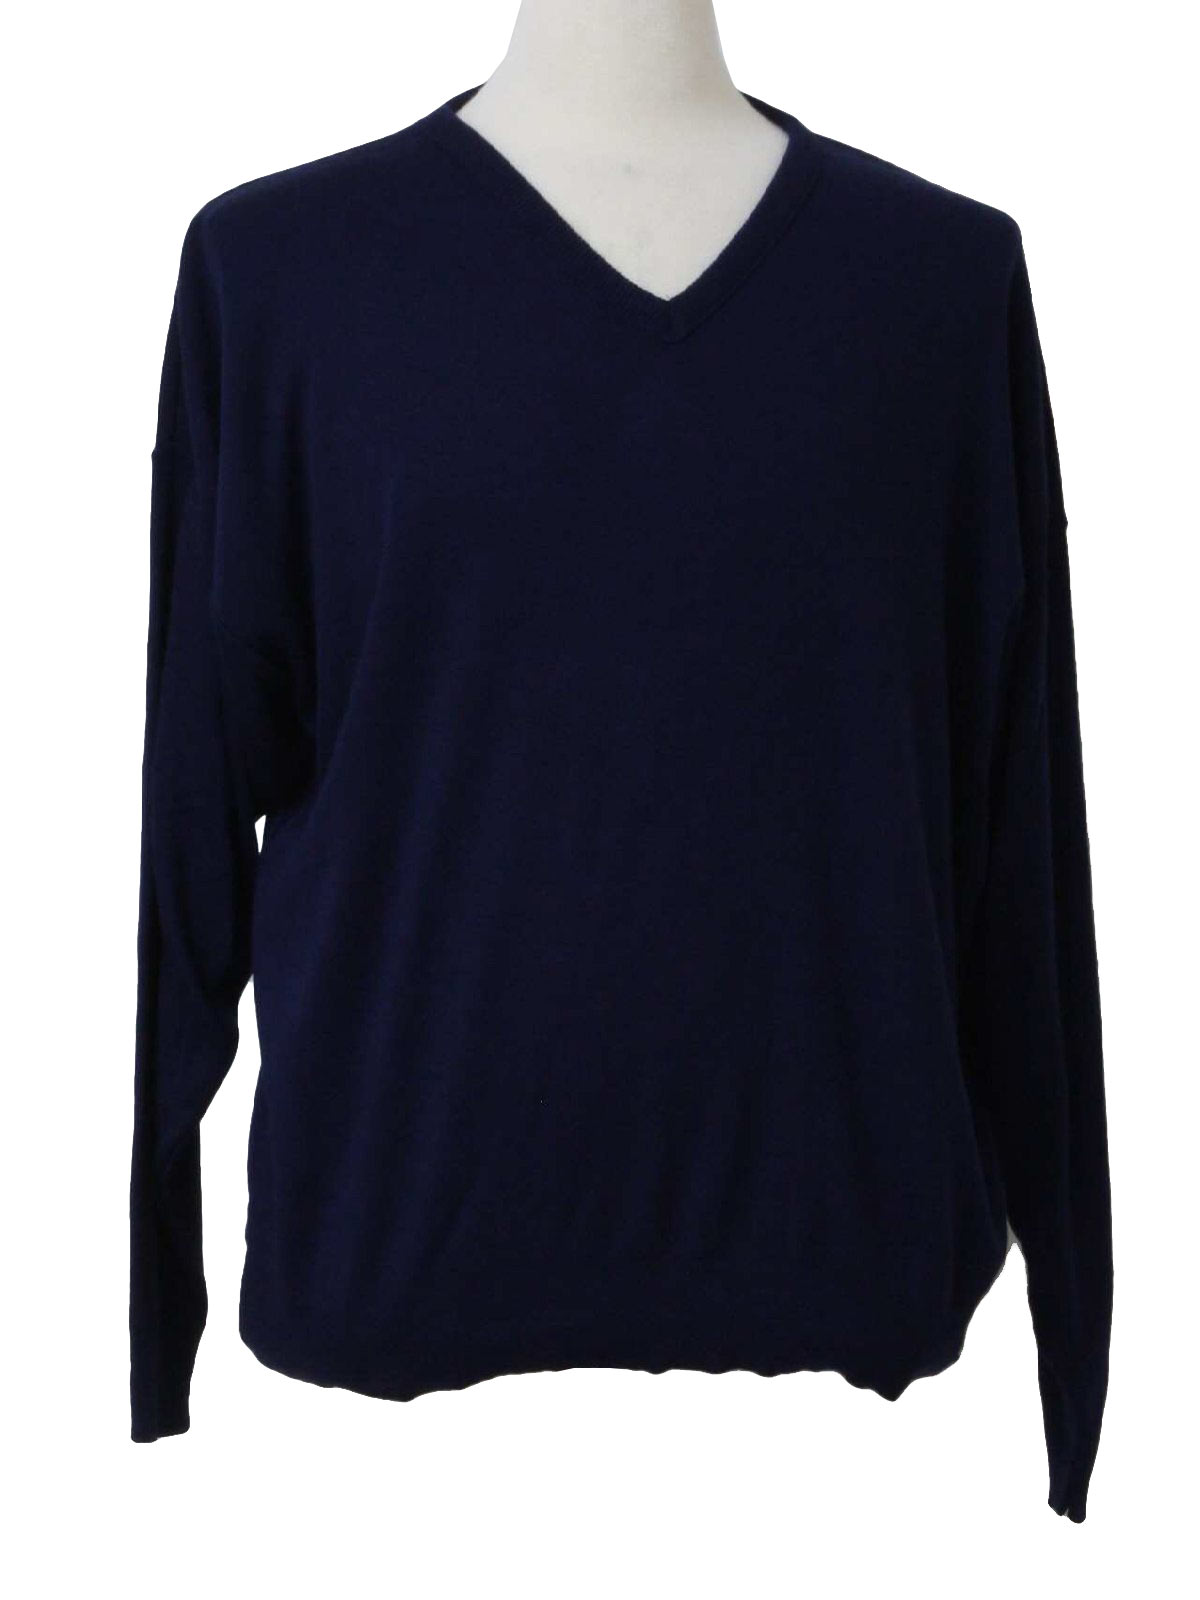 Retro 80s Knit Shirt (Resolute Bay) : 80s -Resolute Bay- Mens navy blue ...